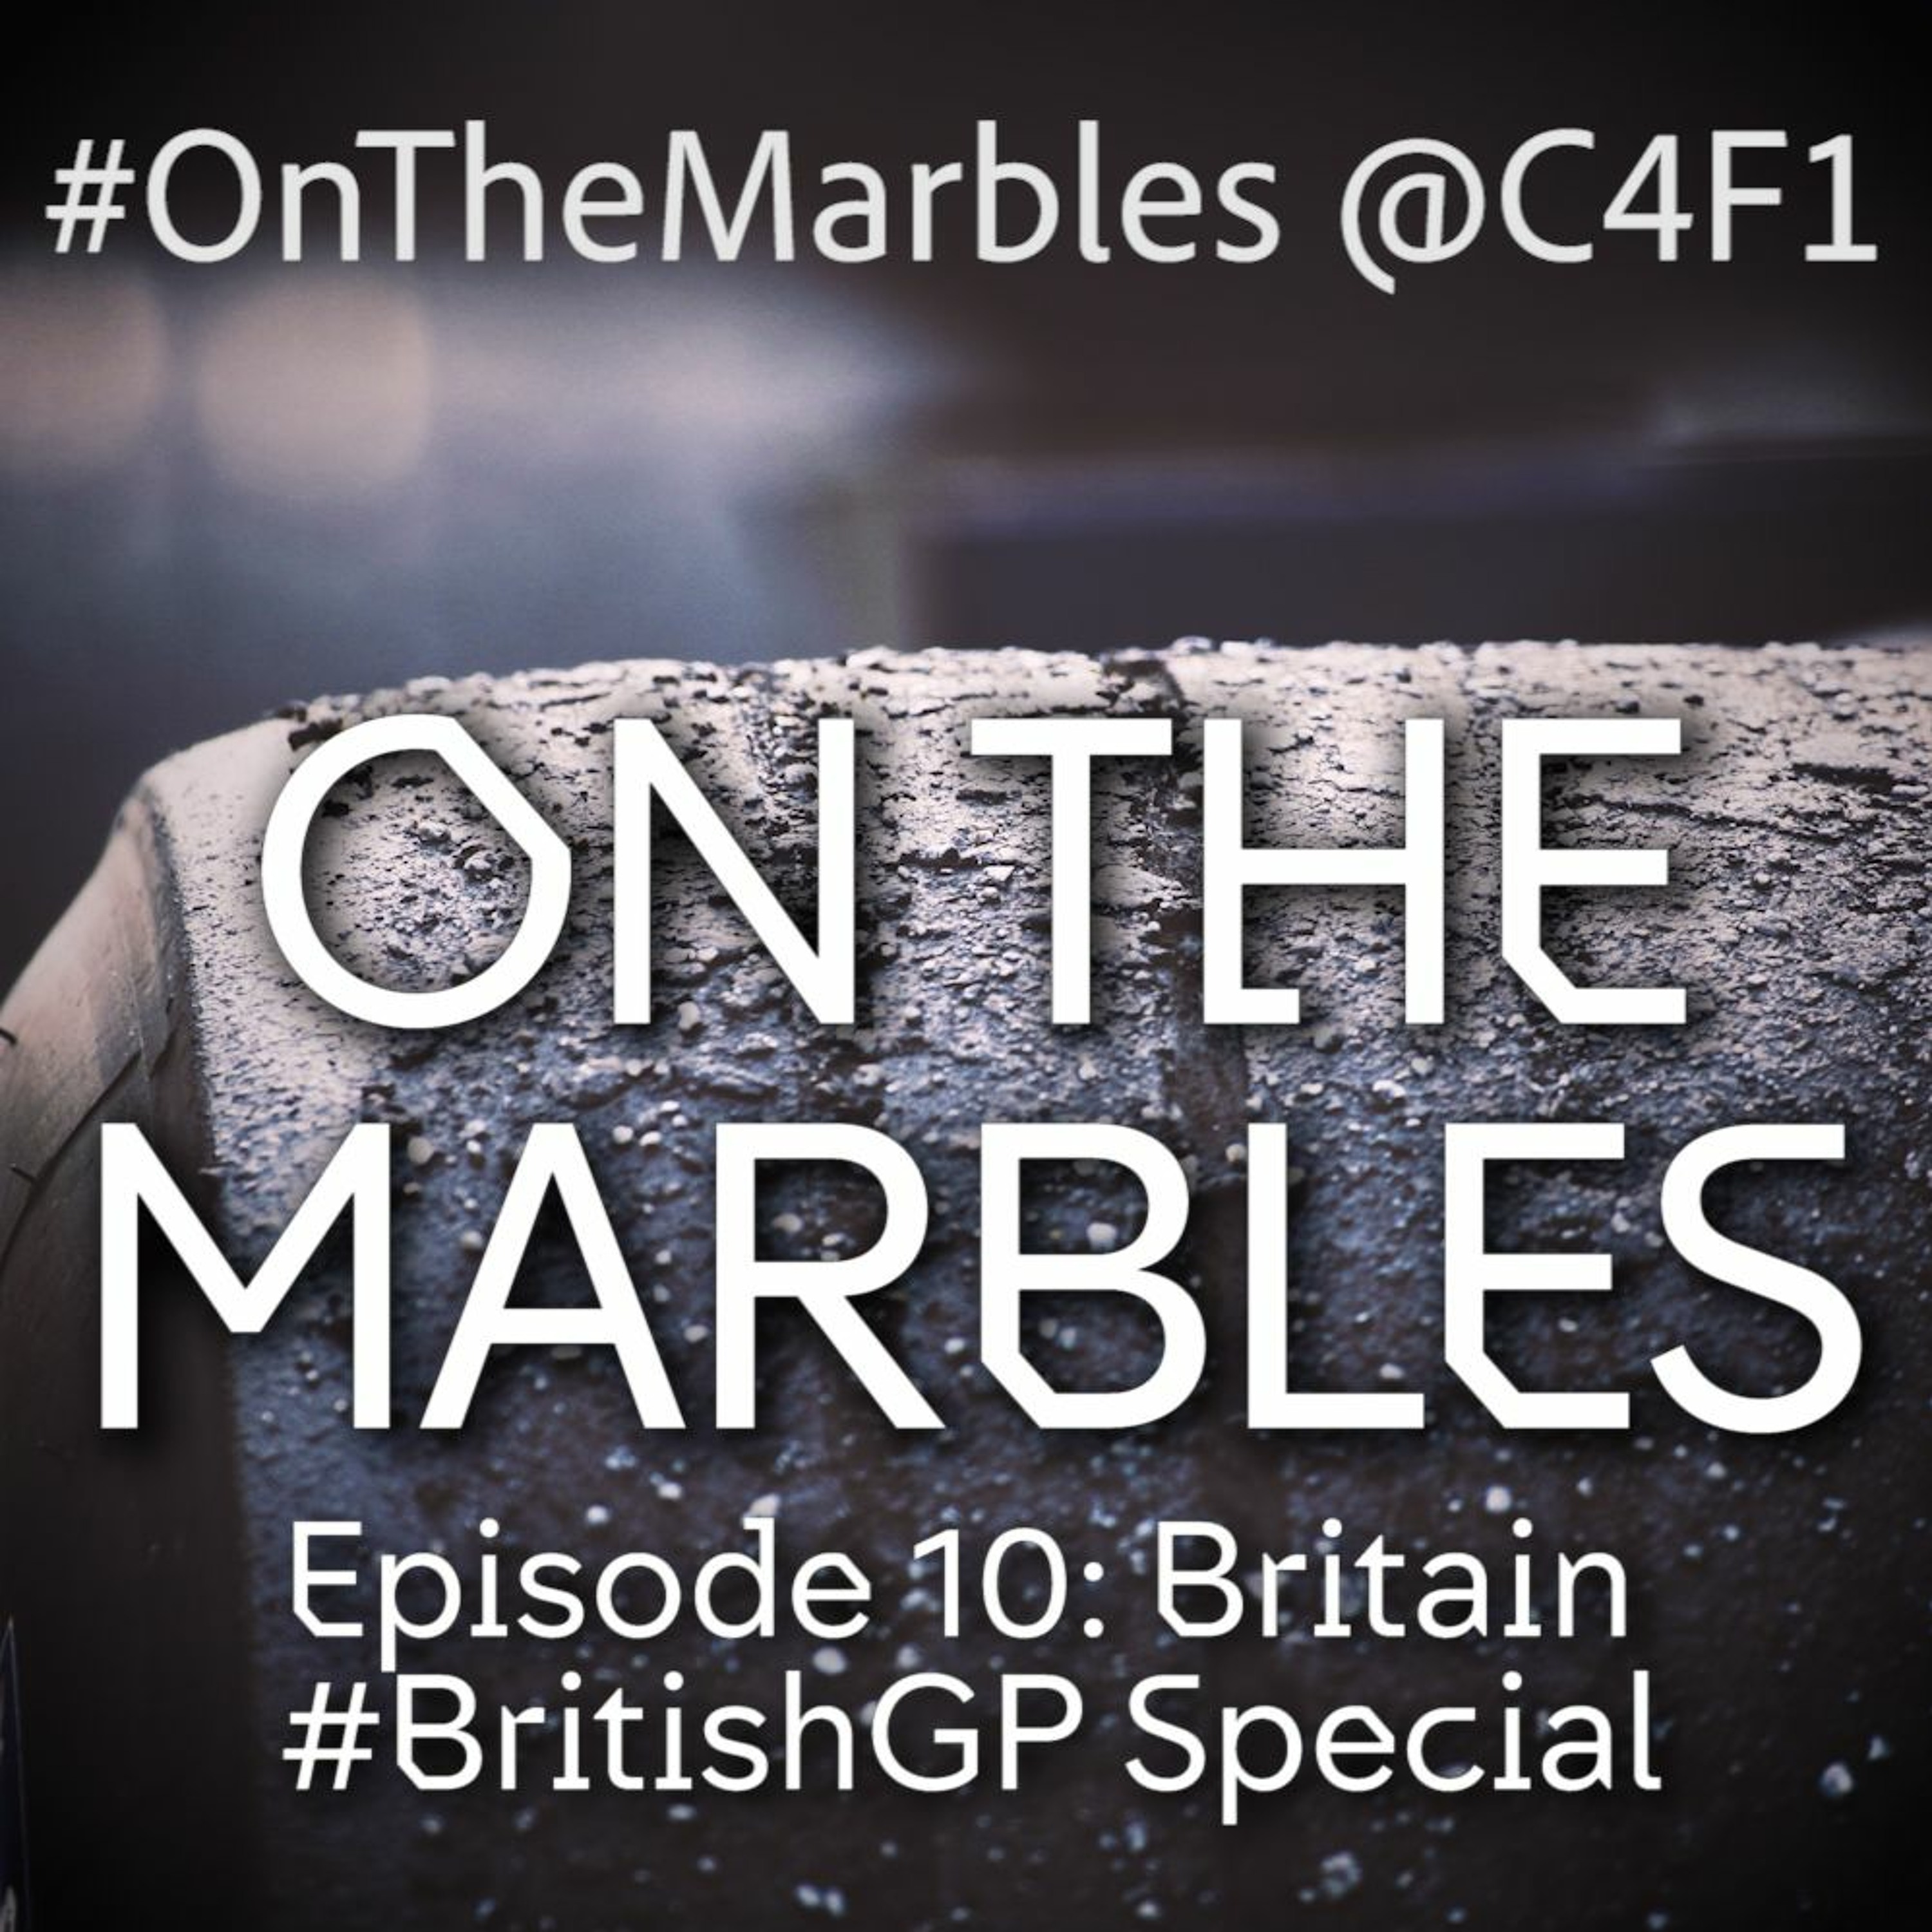 Episode 10: British GP '19